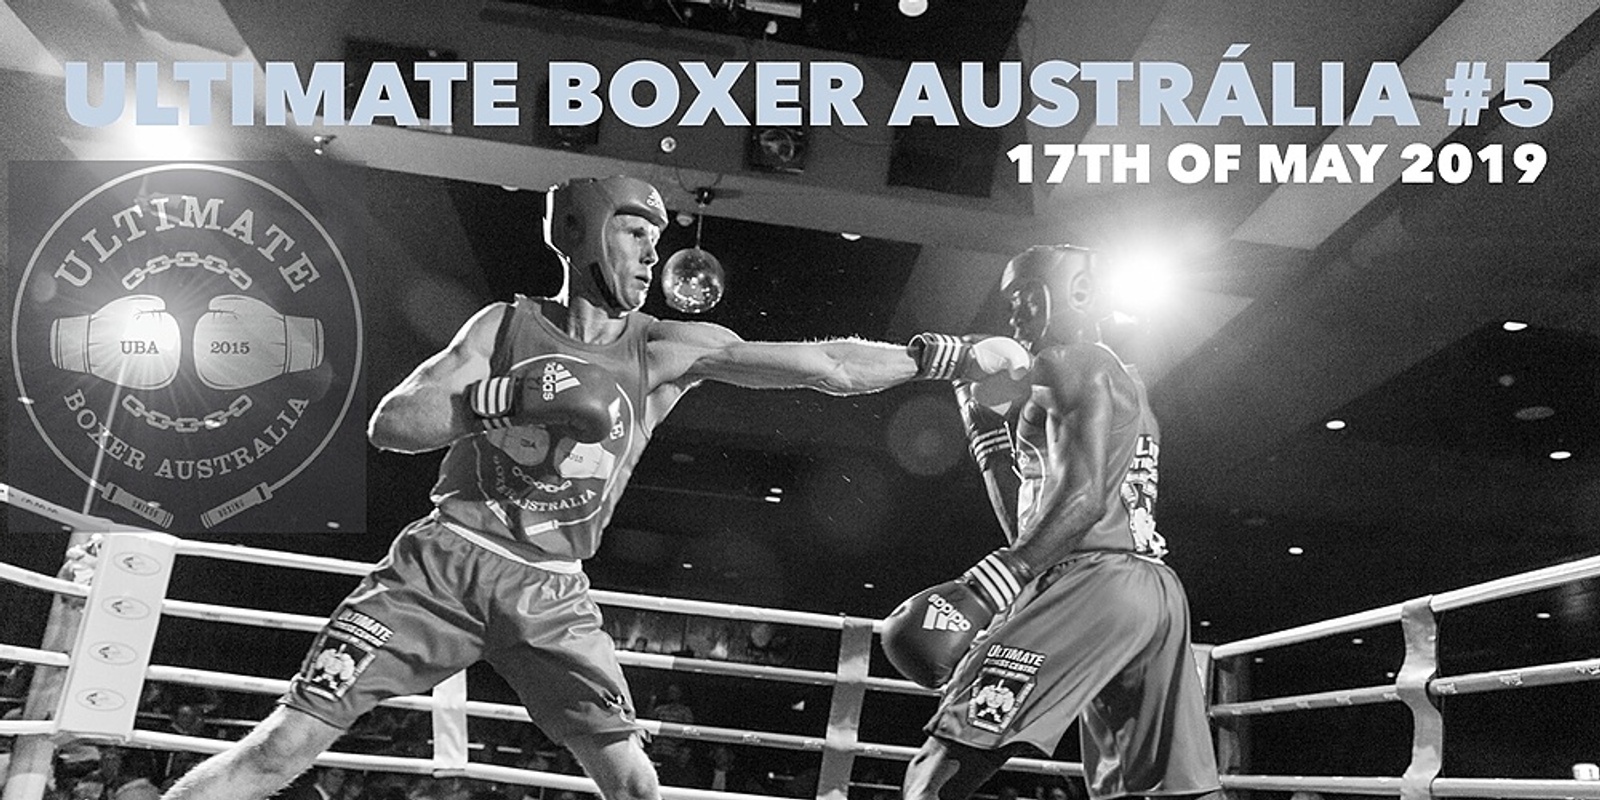 Banner image for Ultimate Boxer Australia #5